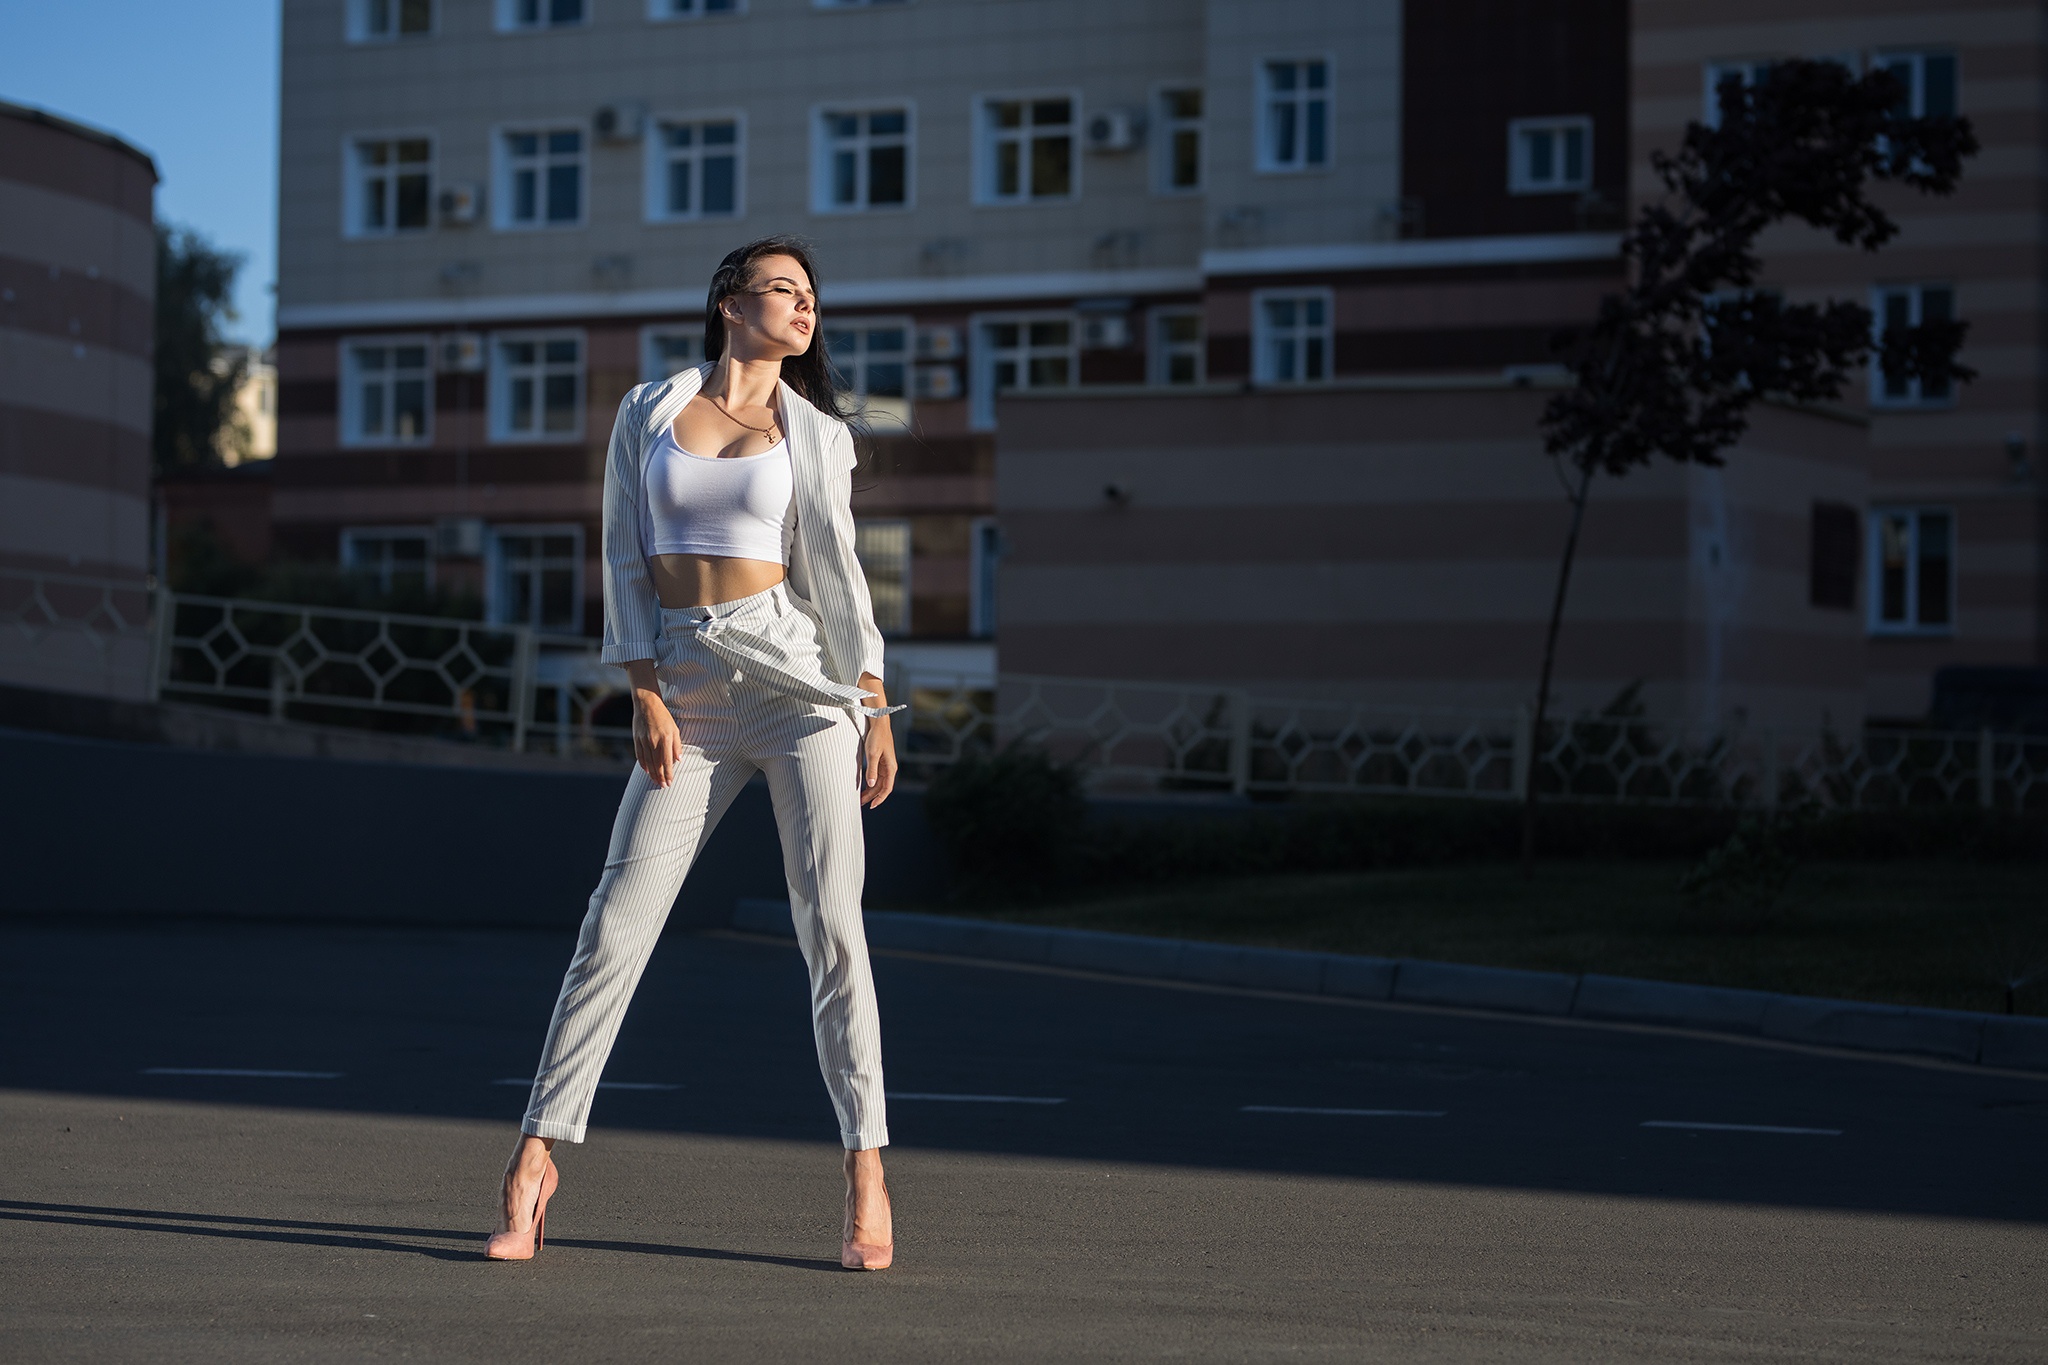 Dmitry Sn Urban High Heels Women Model Women Outdoors Closed Eyes Kristina Romanova 2048x1365